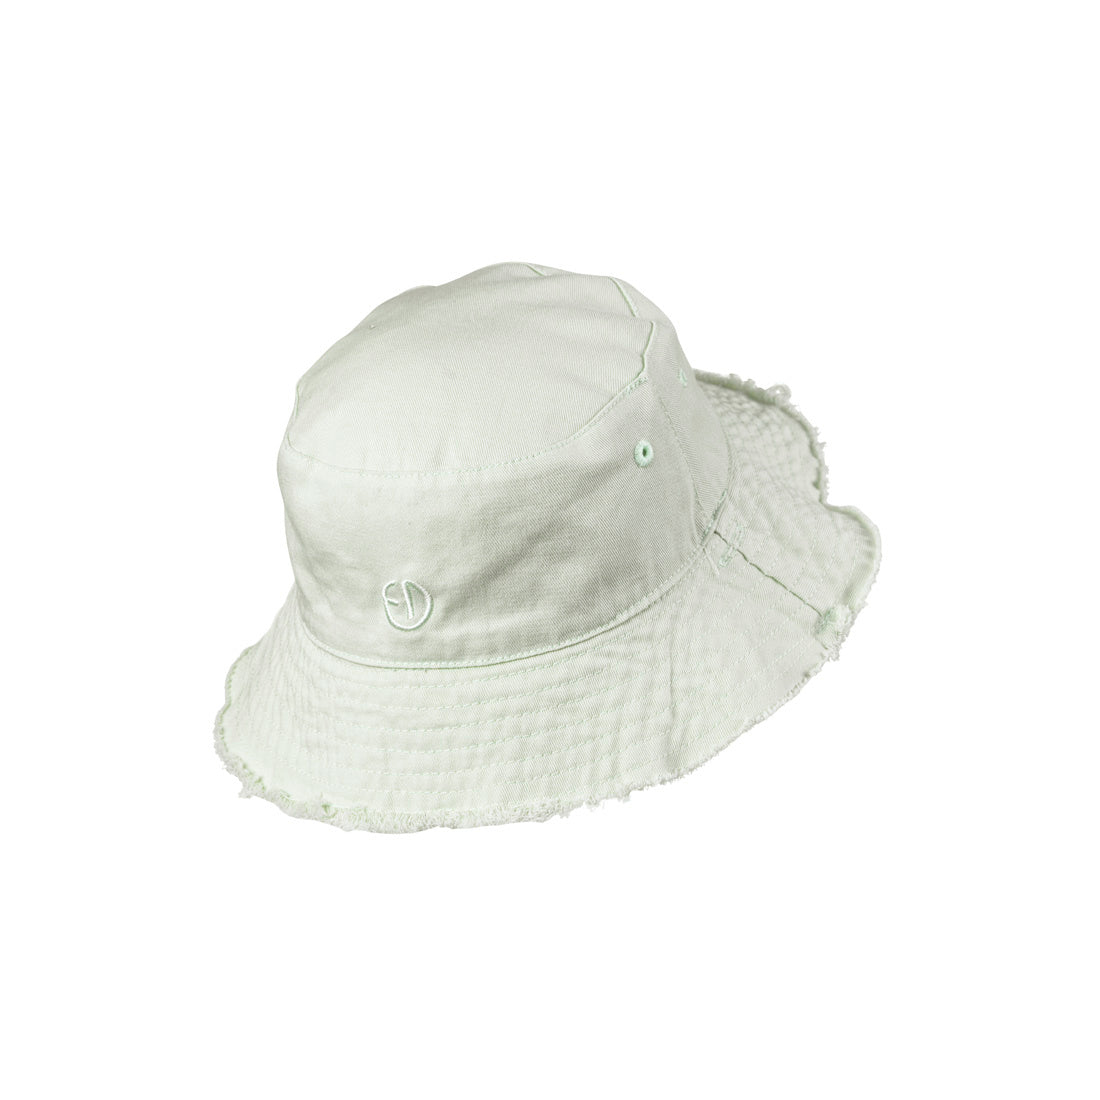 Деталі ELODIE - капелюх капелюхів - Gelato Green - 6-12 місяців